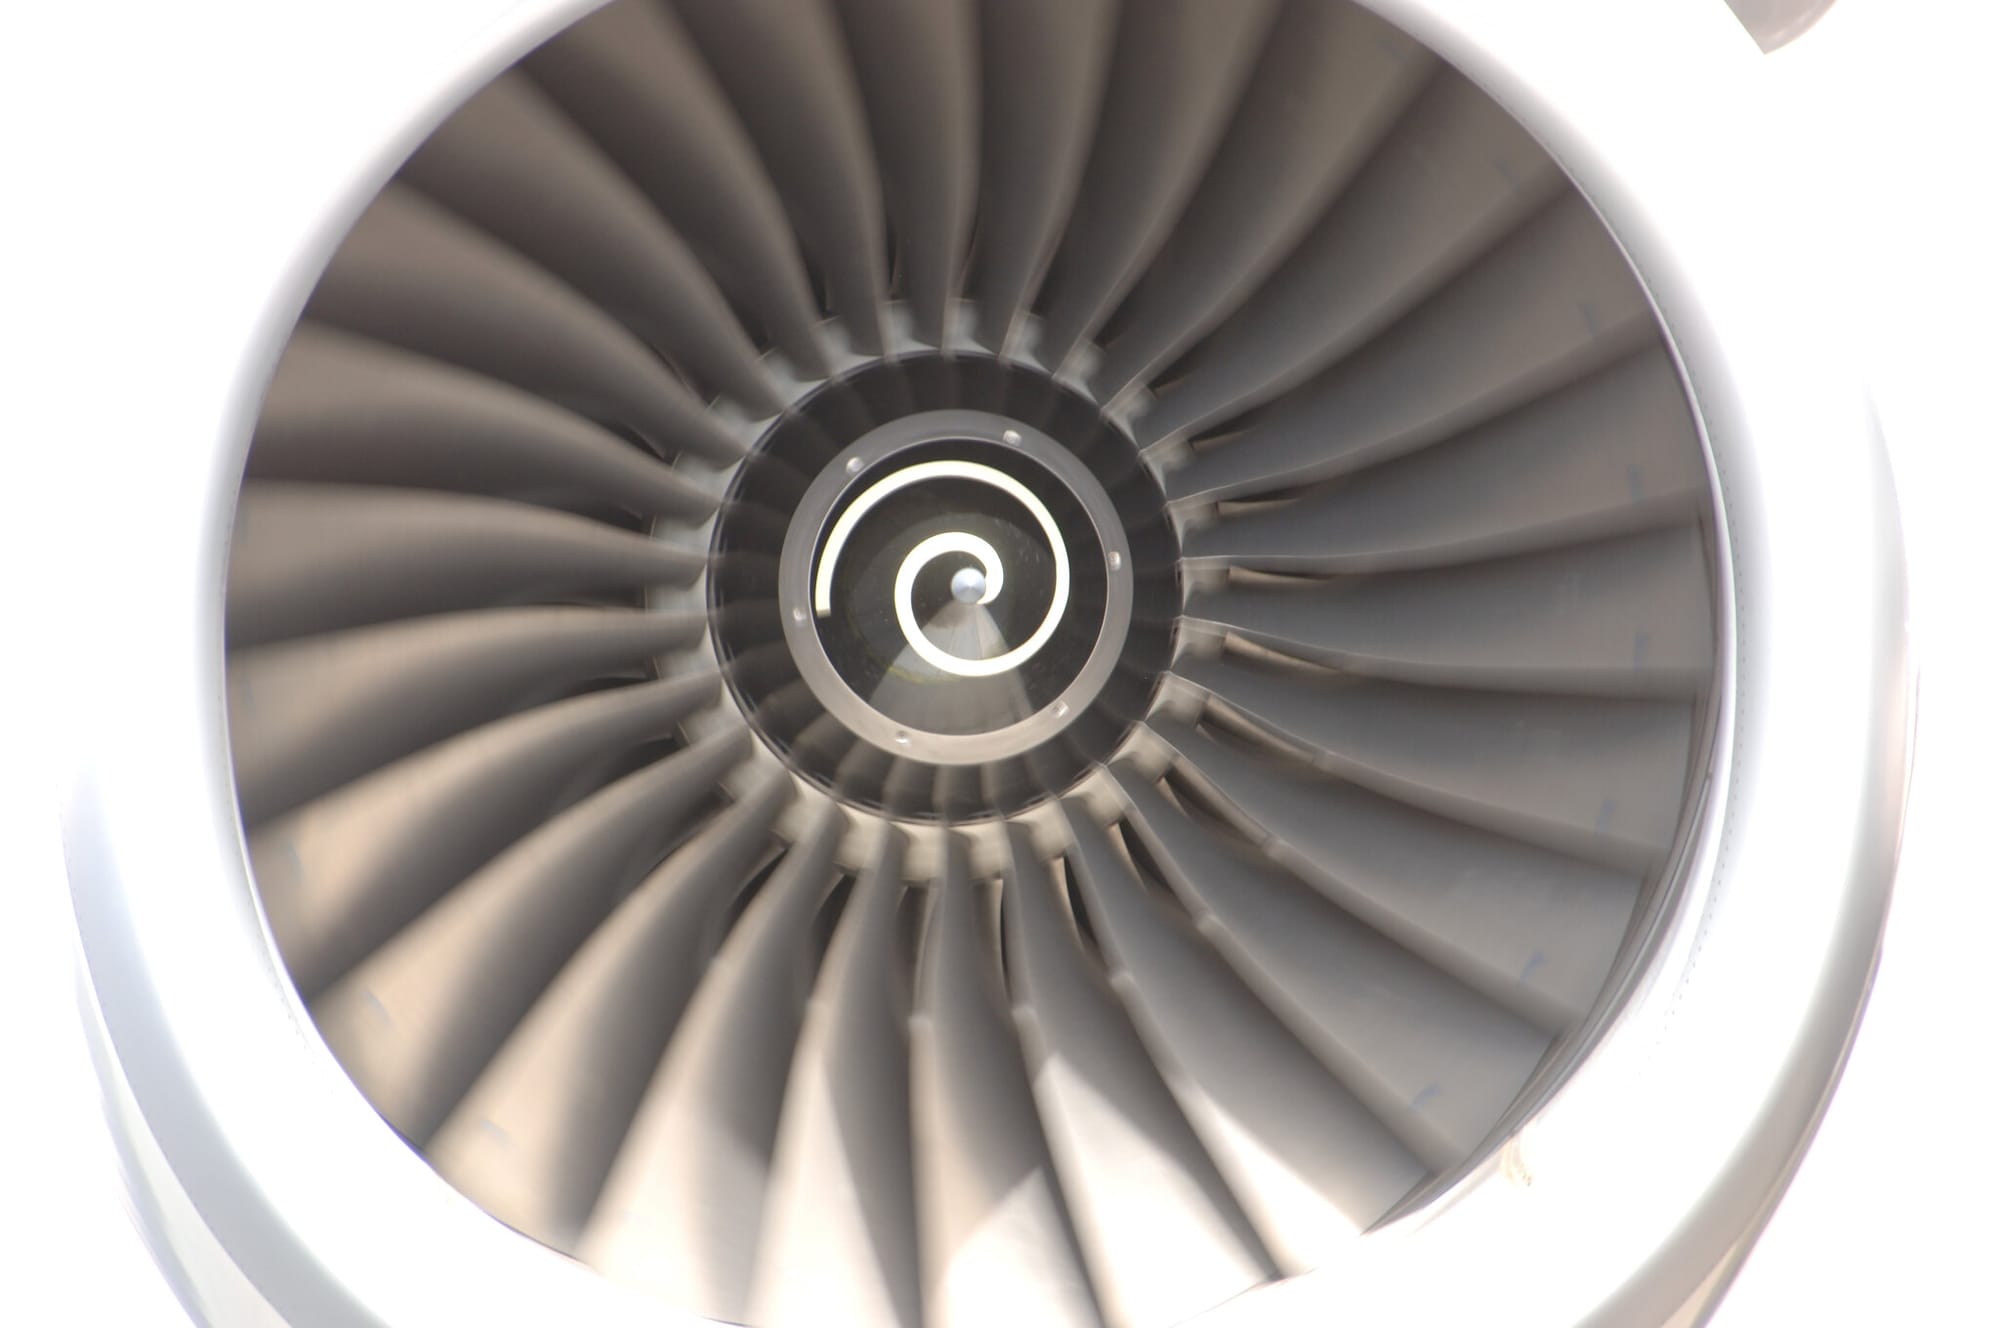 Exclusive Rolls-Royce Trent 700 Aero Engine Management Partnership between Acumen Aviation and Aerolease Aviation